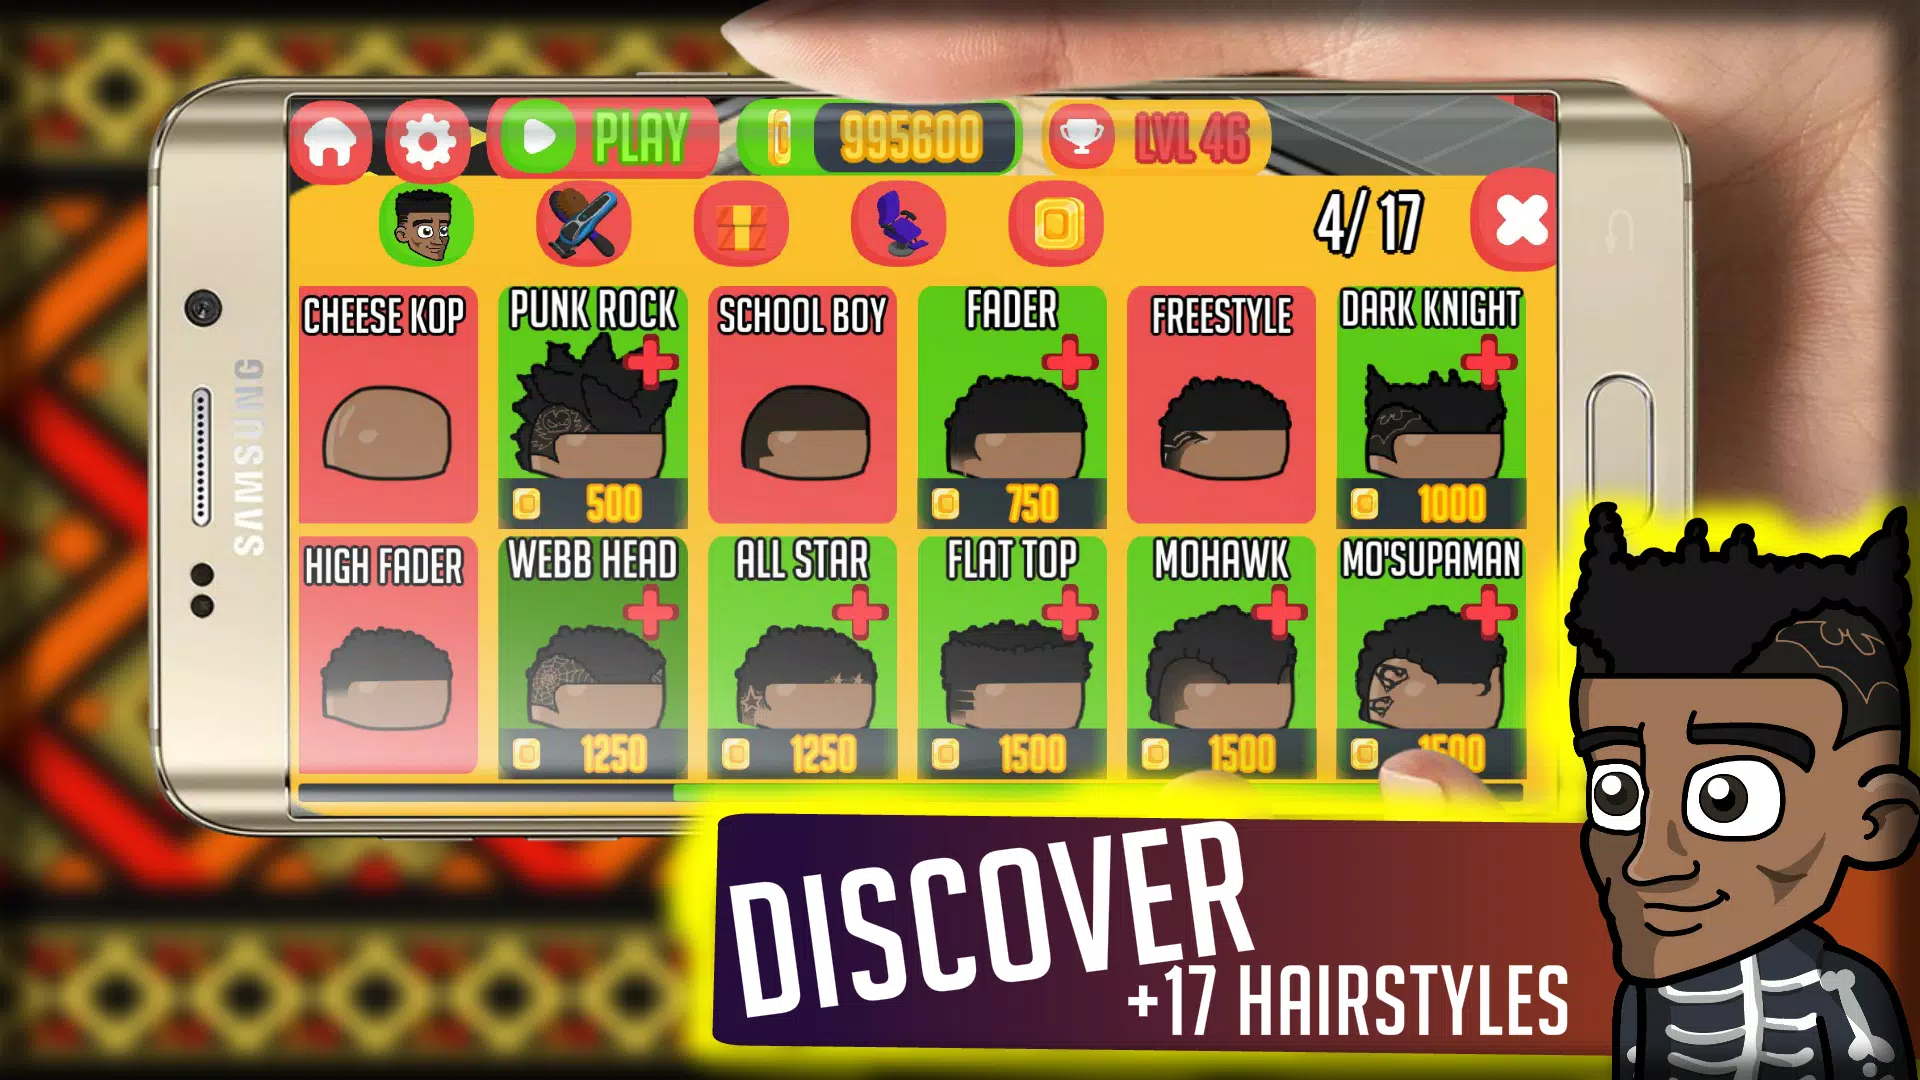 Barber Shop Haircut Simulator APK for Android Download